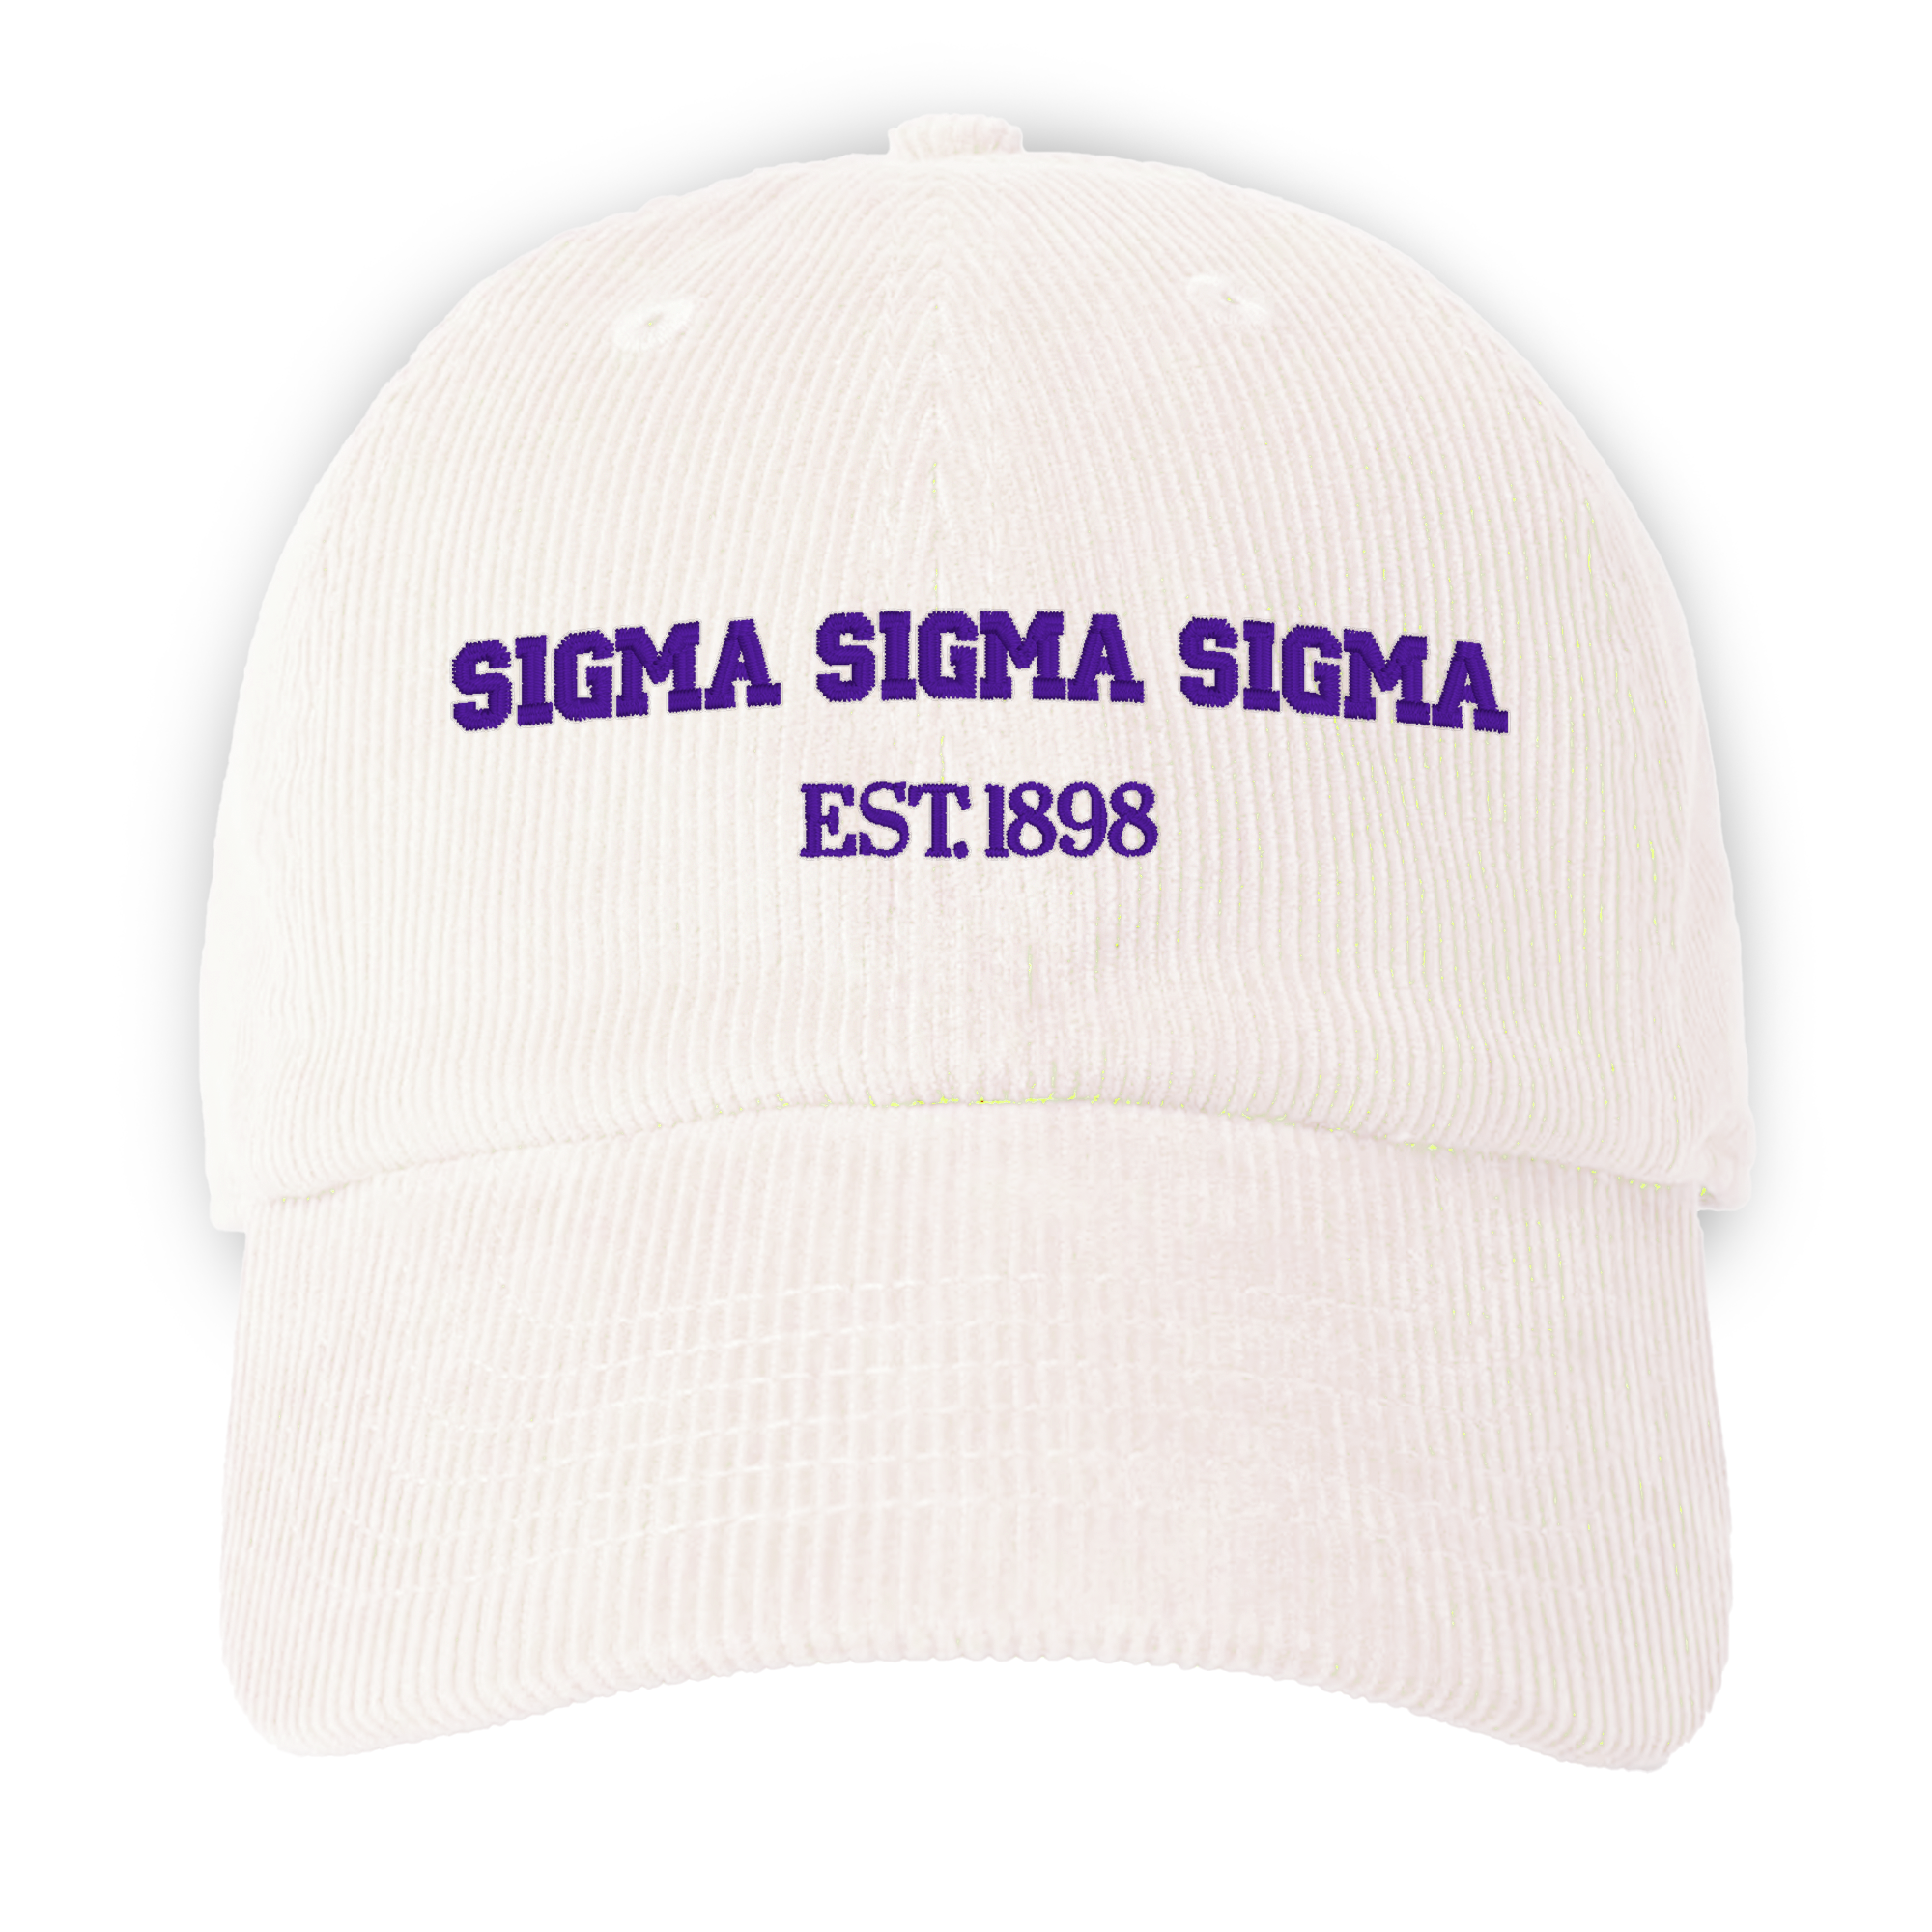 a white baseball cap with the word stigma stigma stigma on it